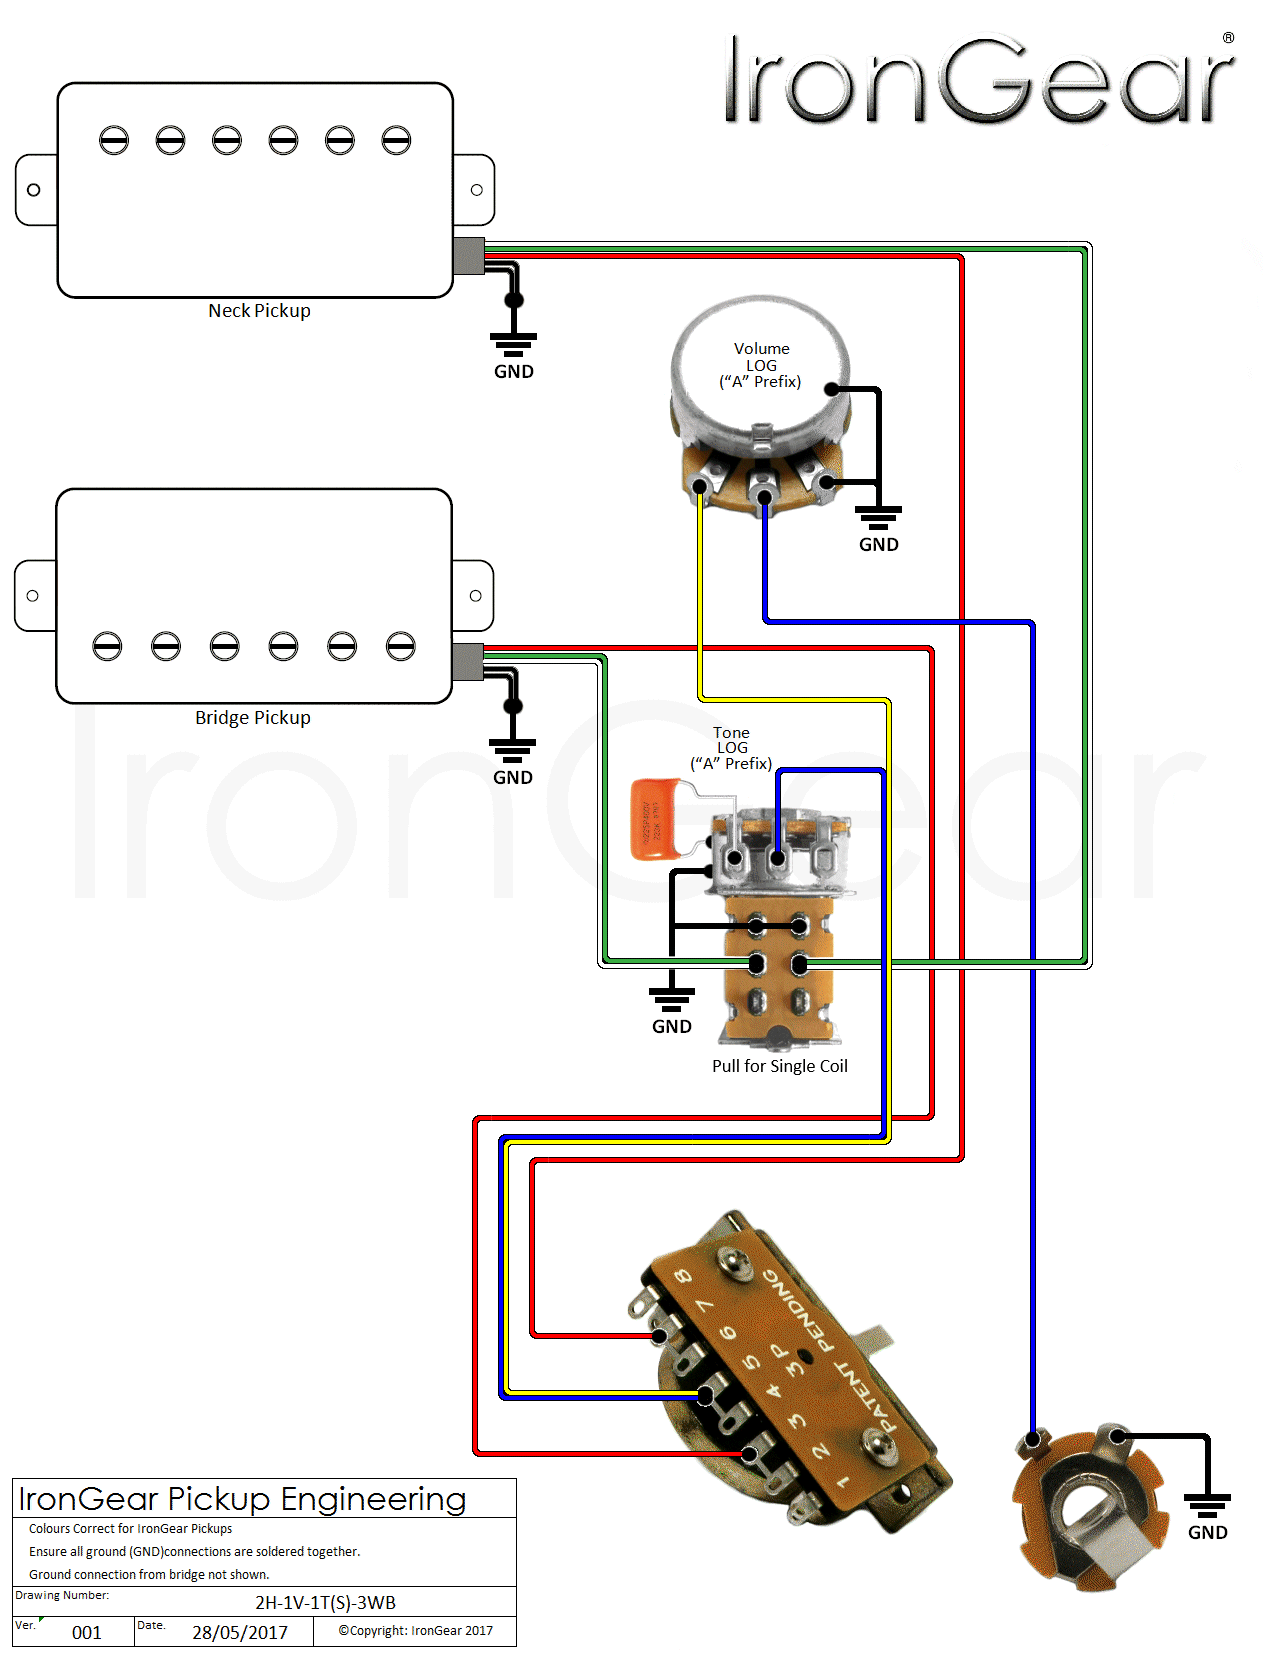 wiring diagram push pull humbuckers for coil split